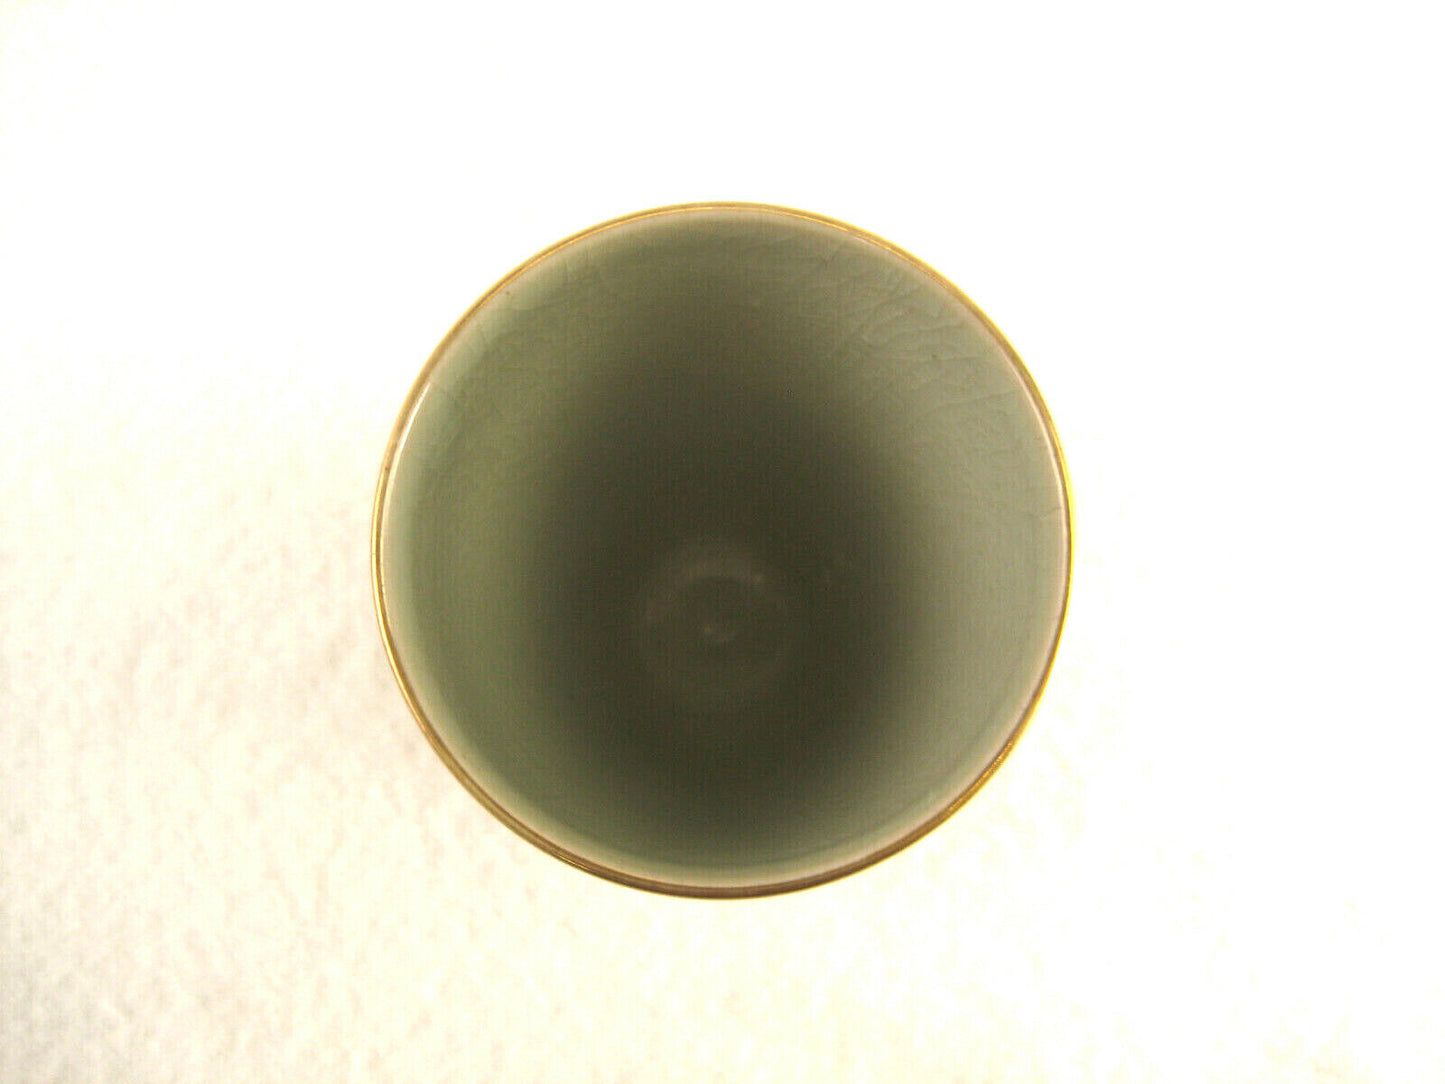 Vintage Japanese Cup Guinomi Sake Kutani Wear Heikei Monogatari Taira Clan